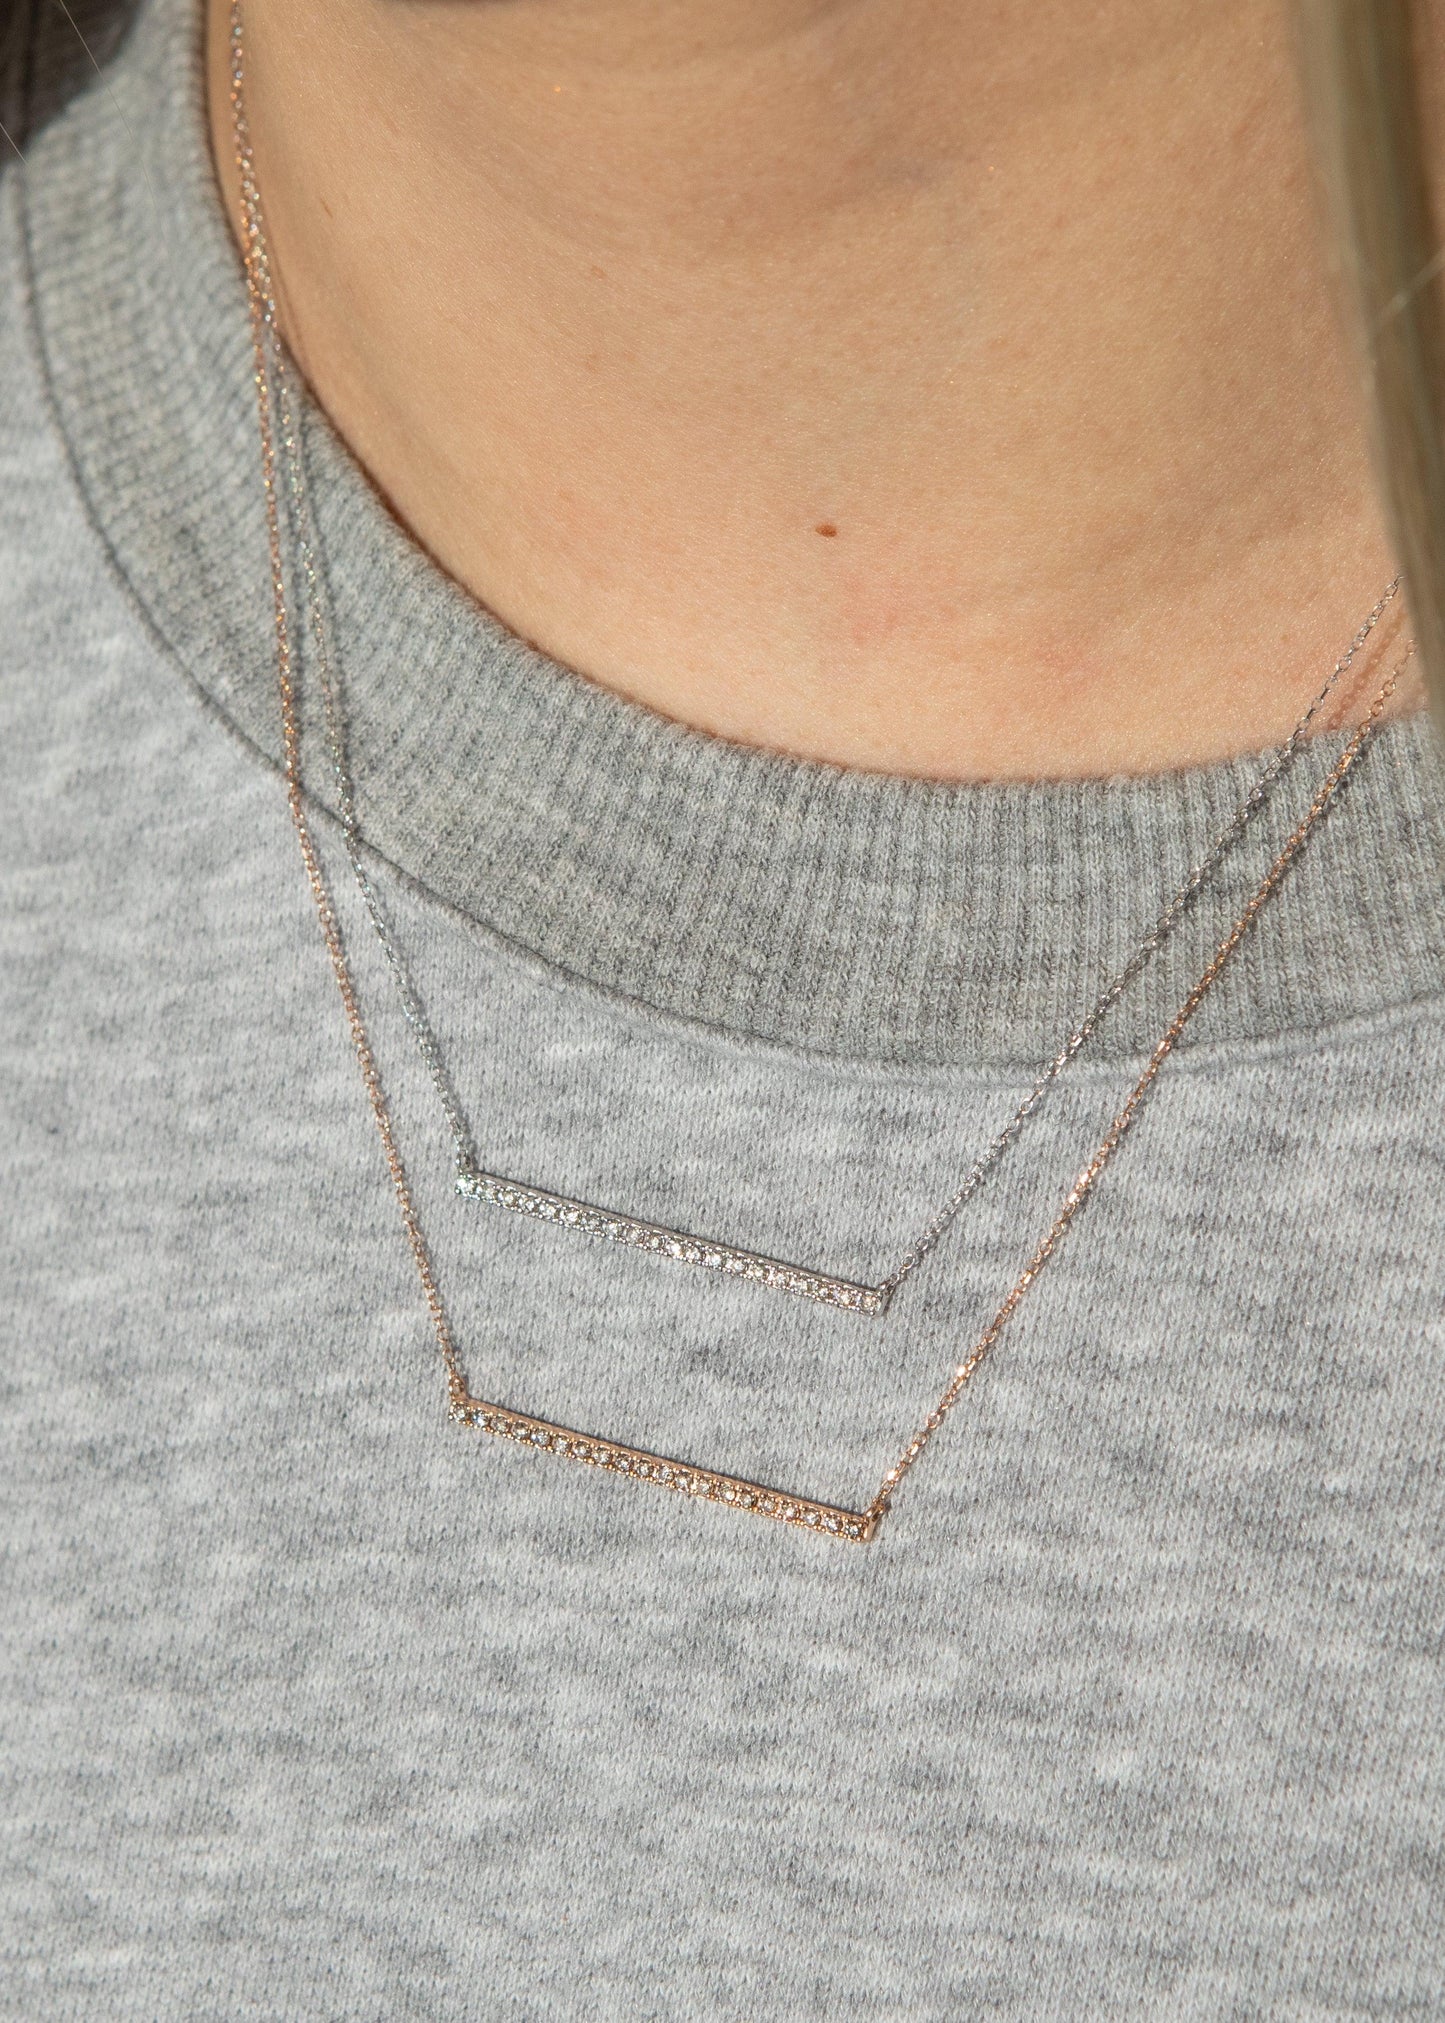 Single Row Diamond Bar Necklace